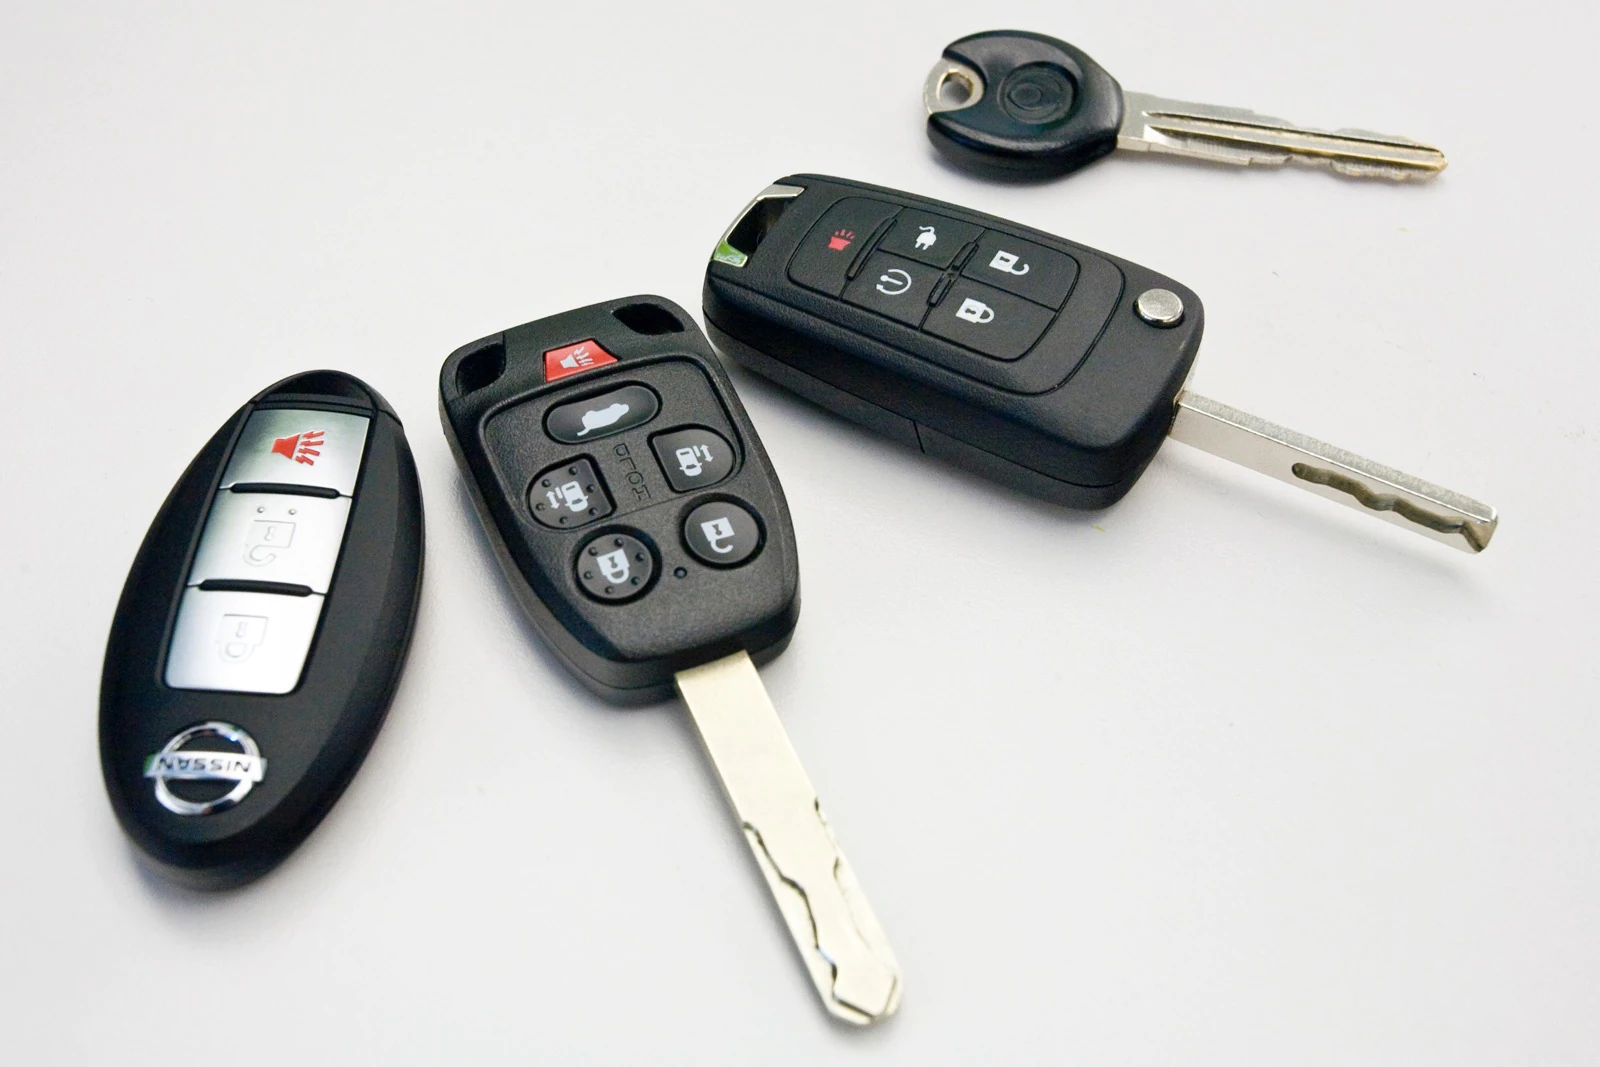 Can a car key manufacturer make a duplicate key from a broken key?